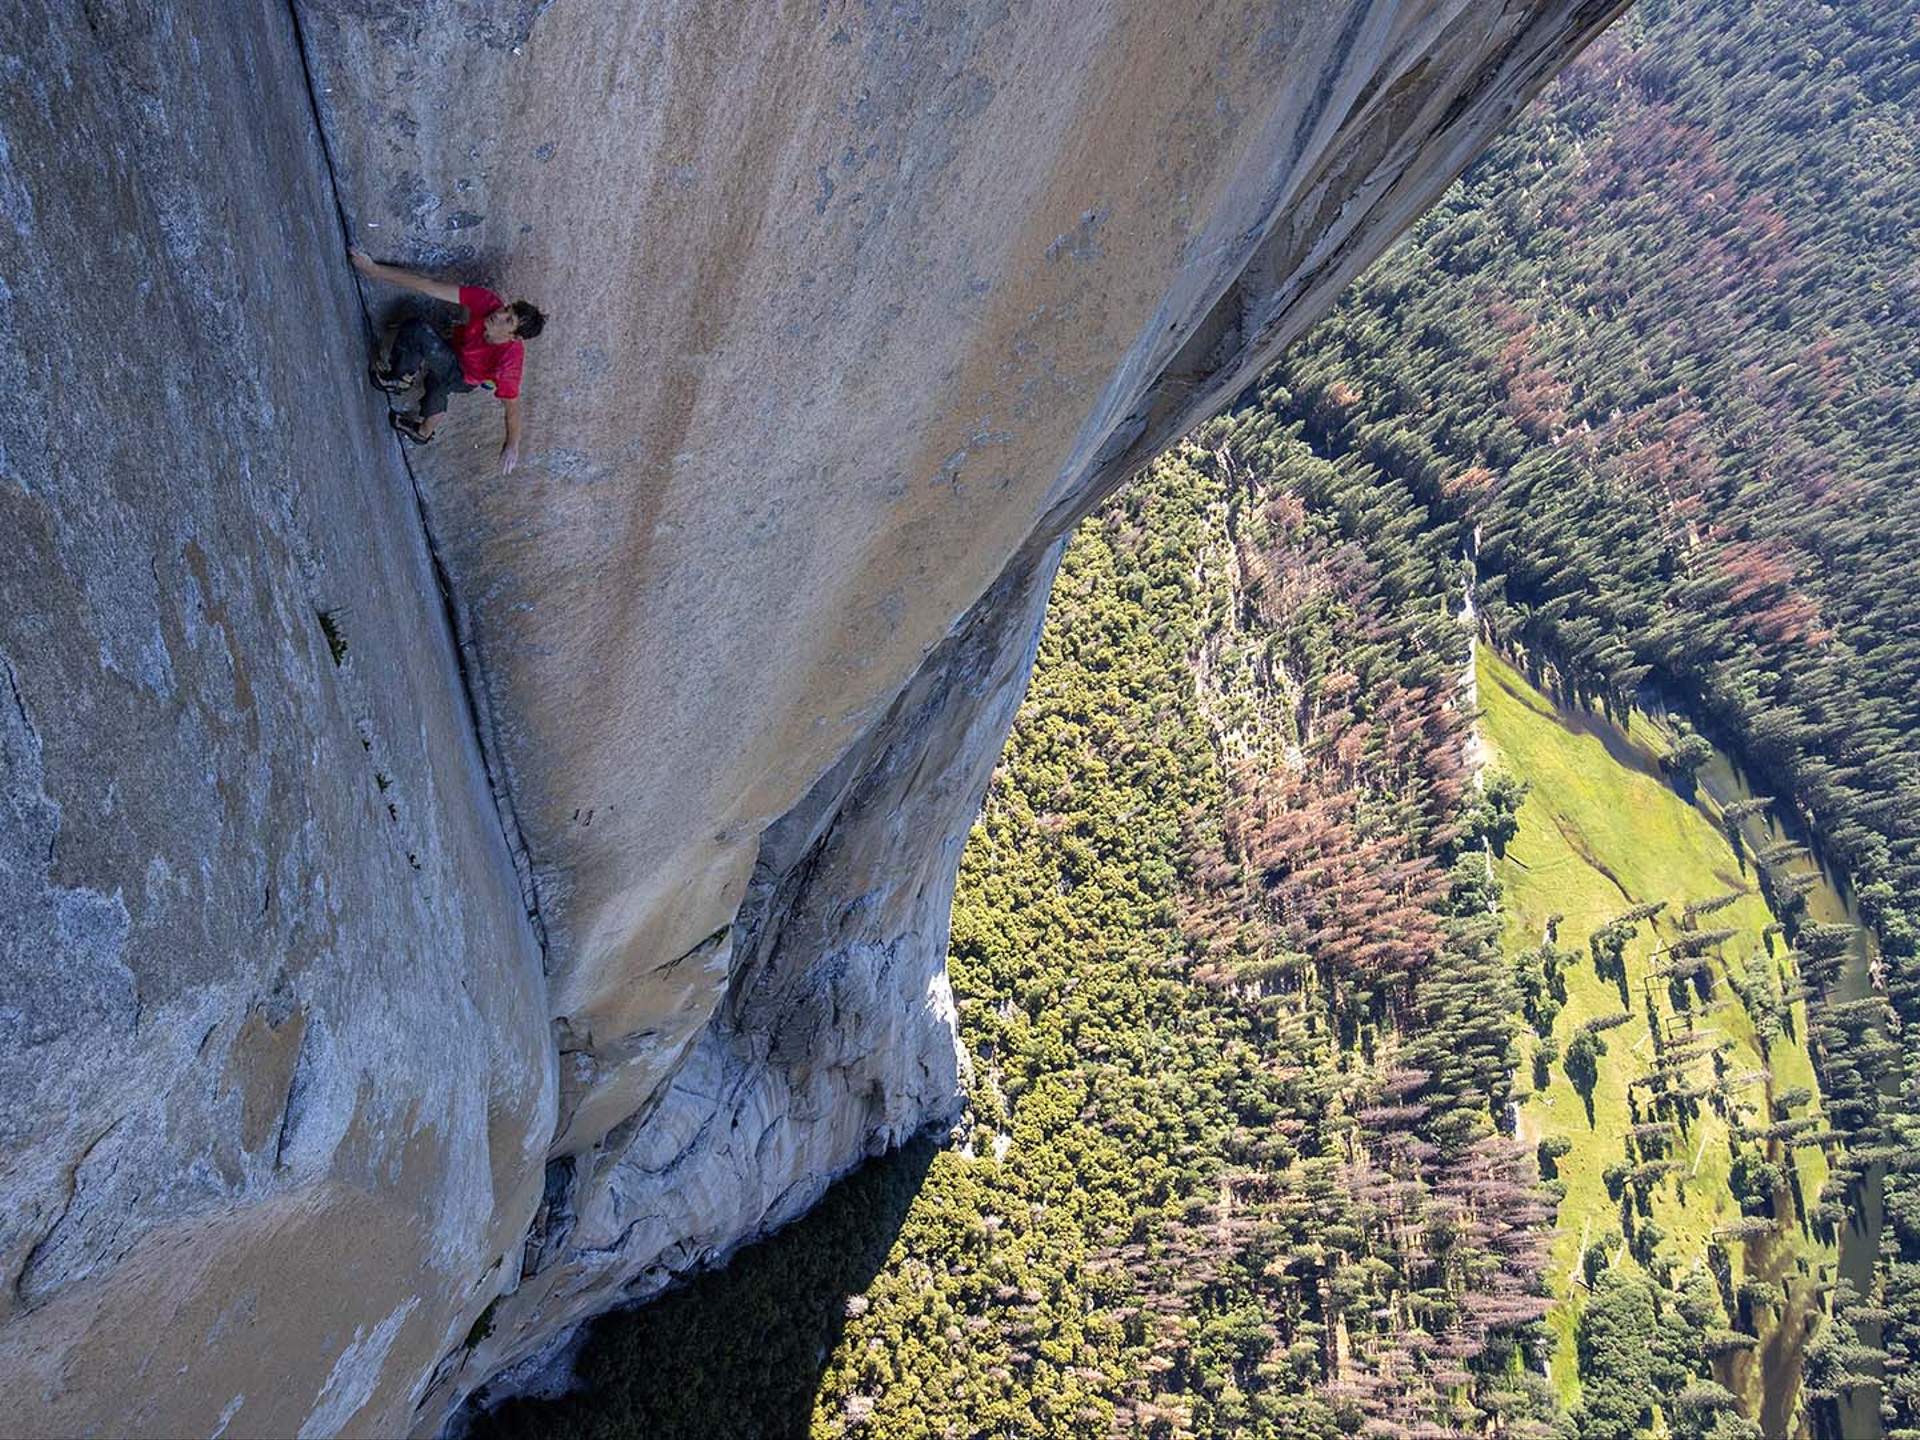 How Alex Honnold Climbed Yosemite's El Capitan for 'Free Solo'